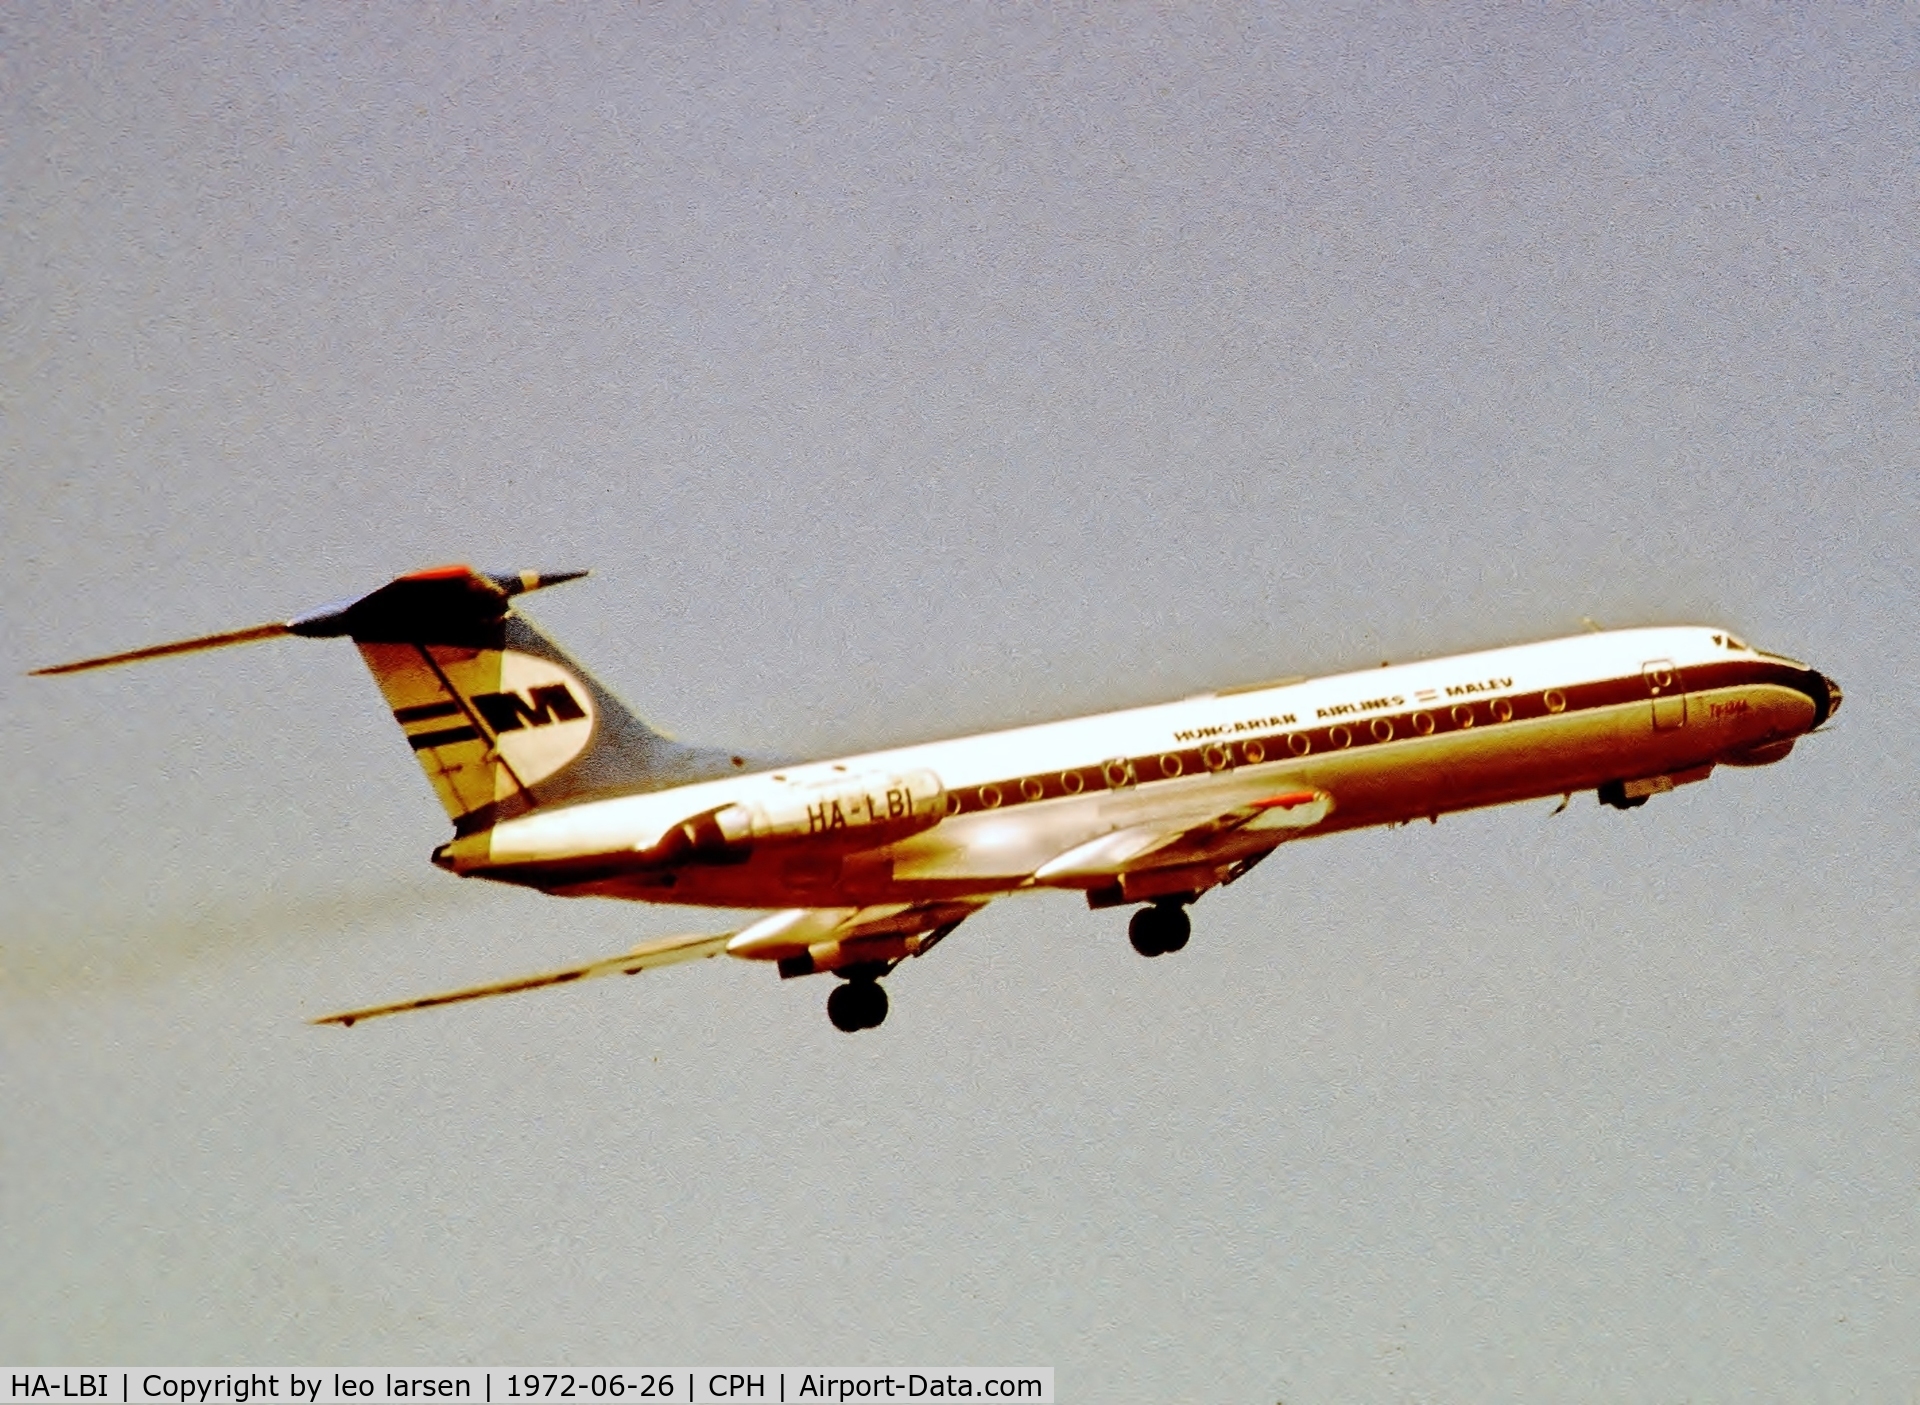 HA-LBI, 1971 Tupolev Tu-134A-3 C/N 1351301, Copenhagen 26.6.1972